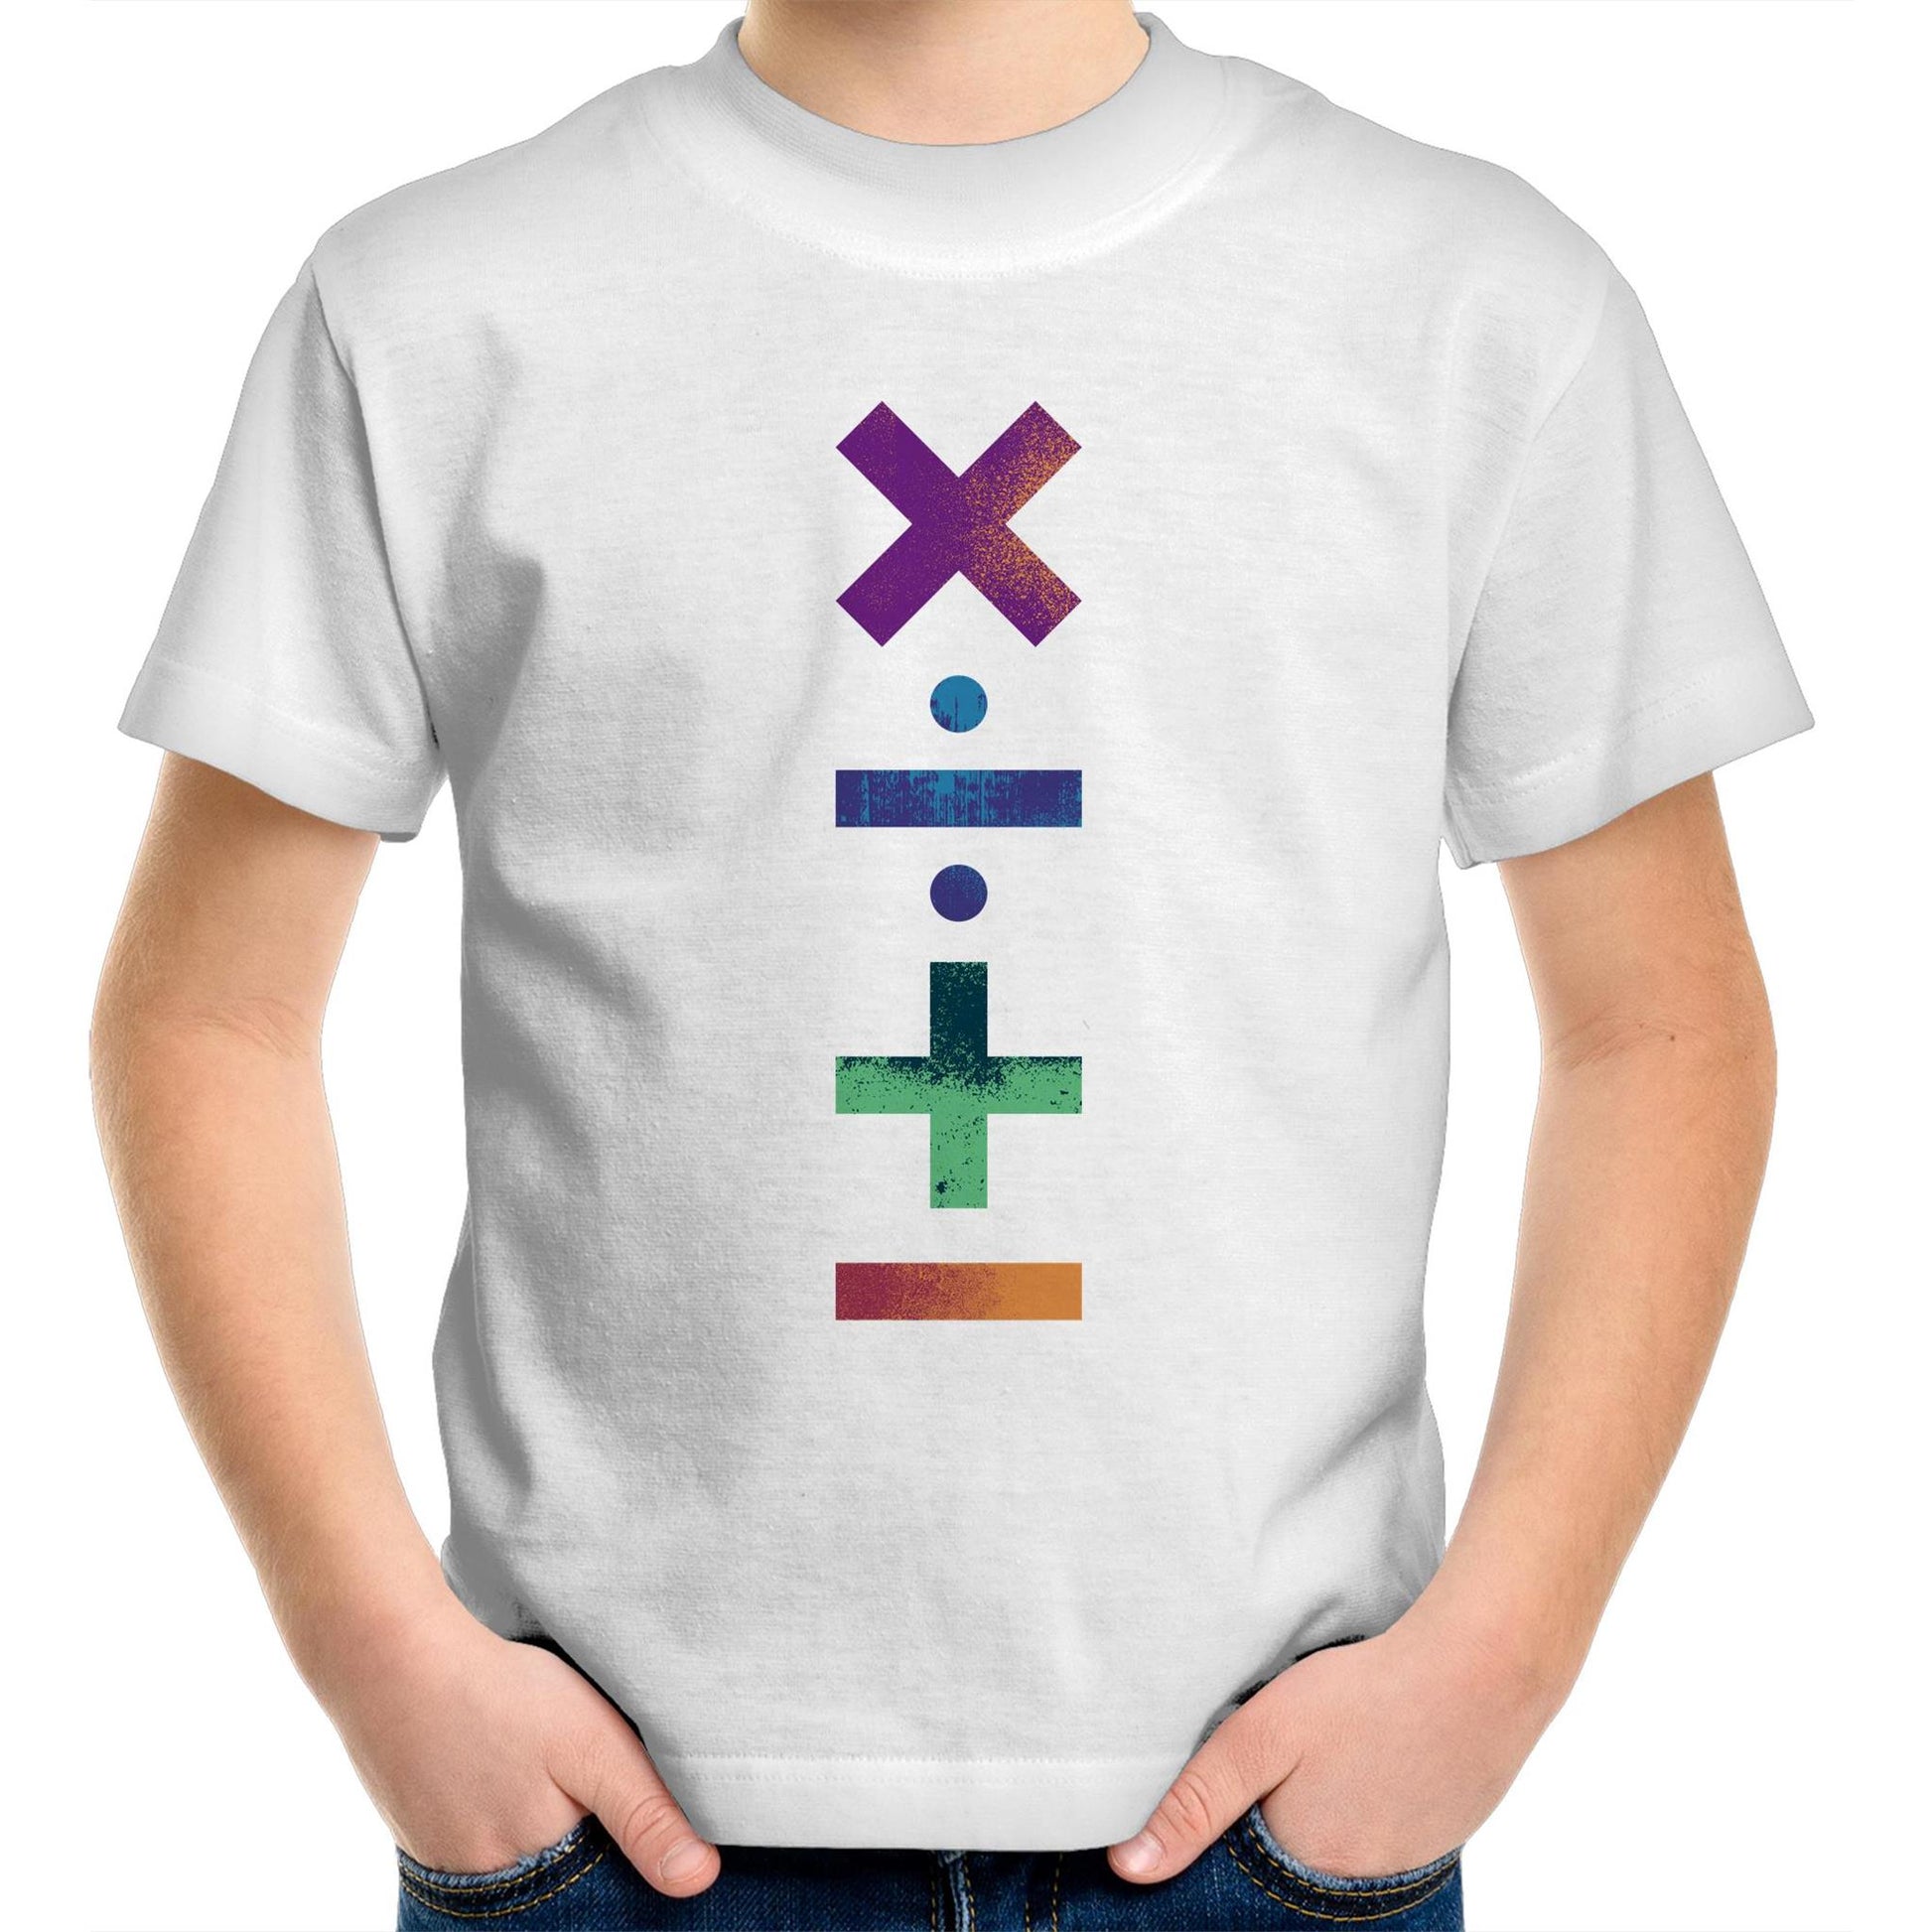 Maths Symbols - Kids Youth Crew T-Shirt White Kids Youth T-shirt Maths Science